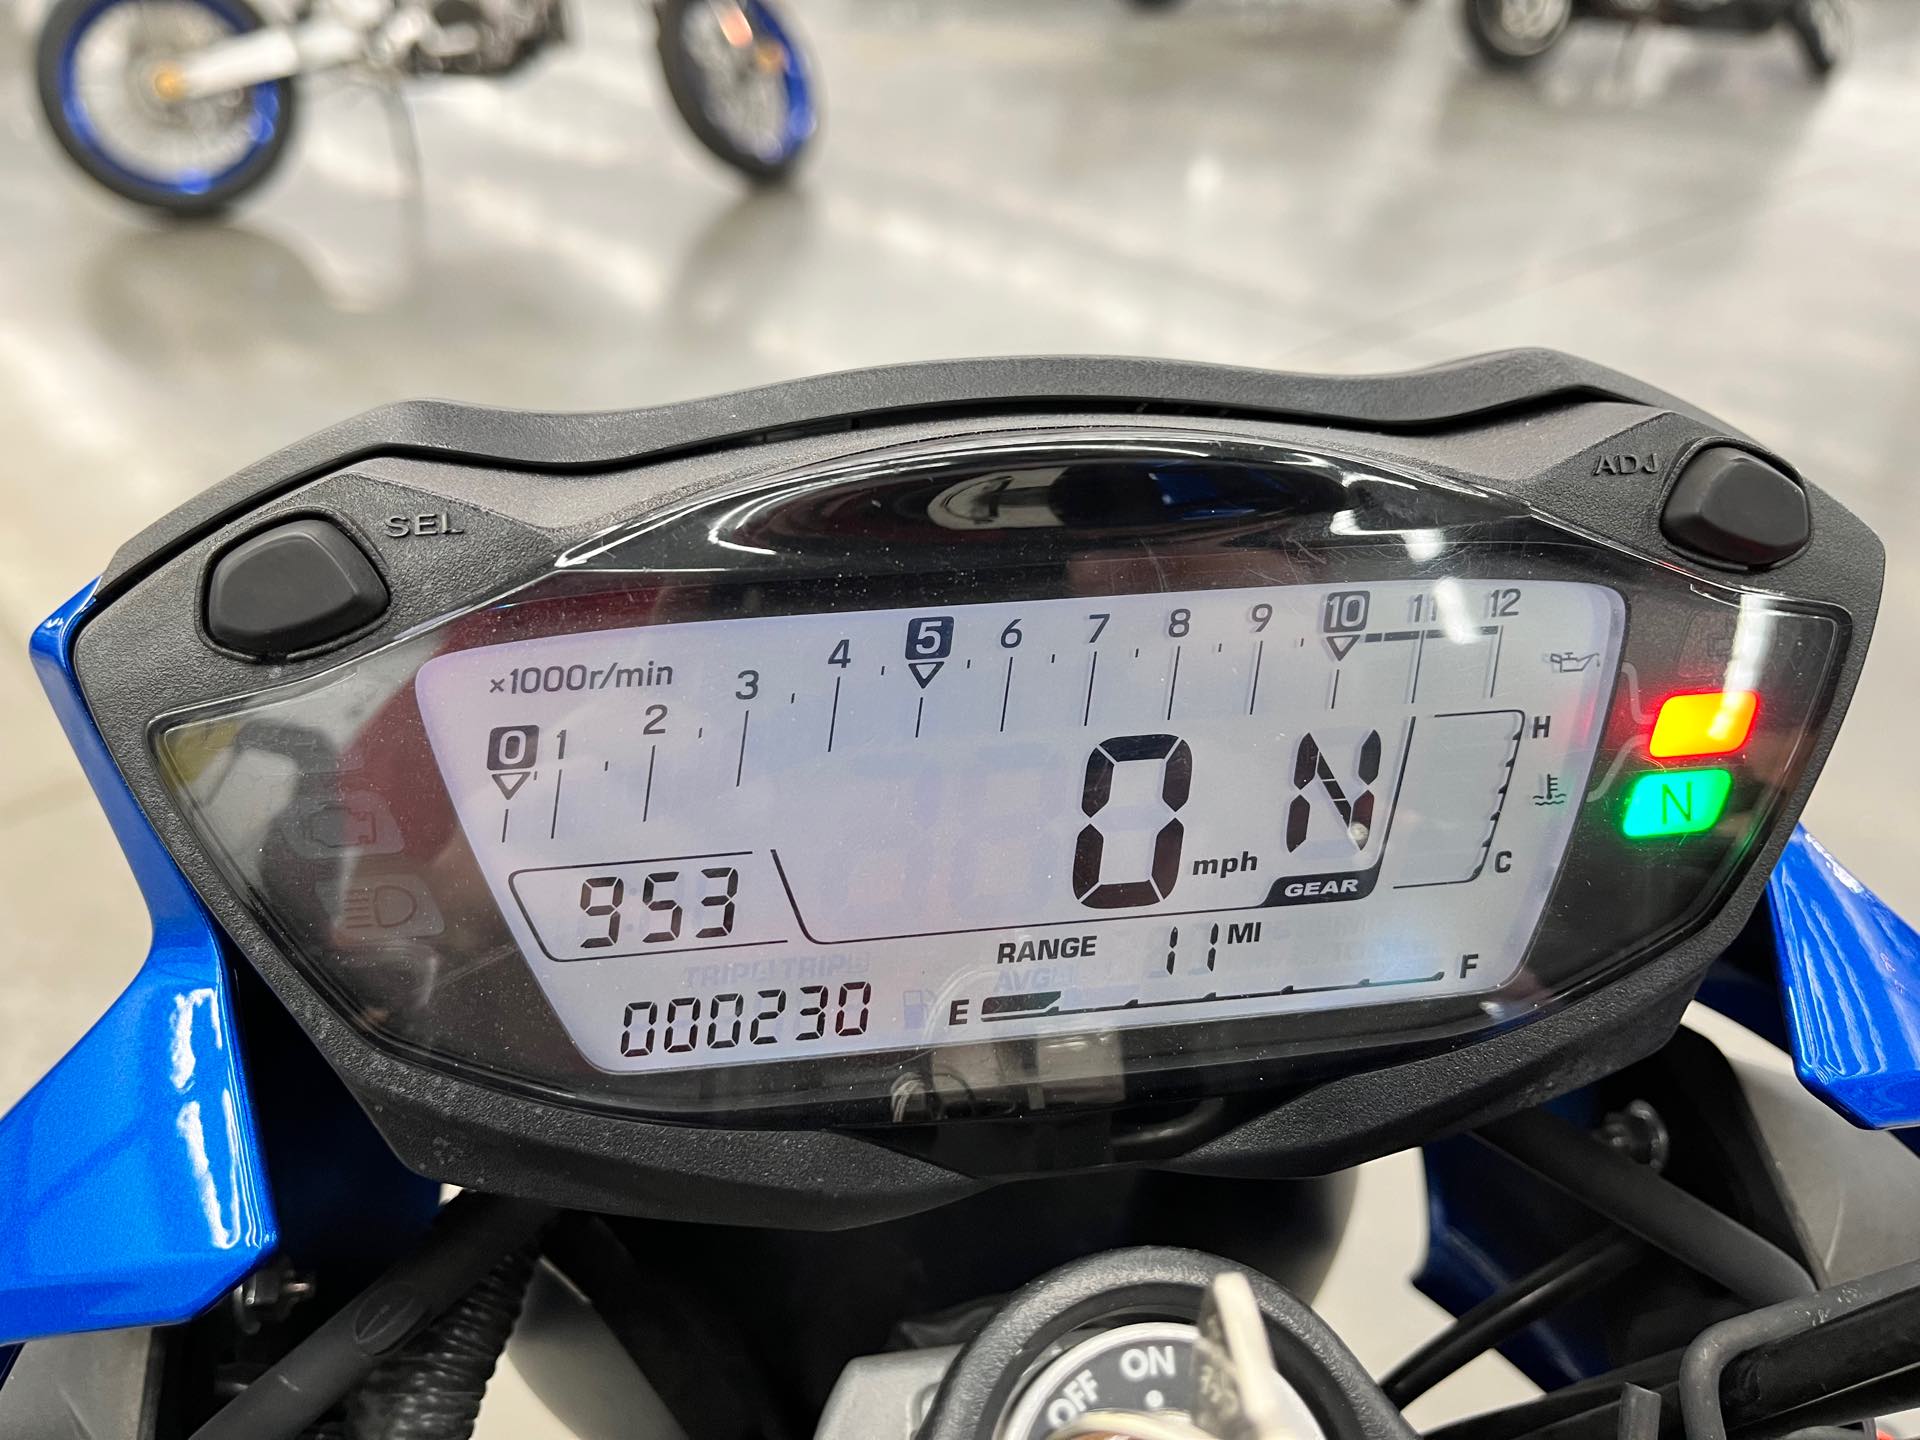 2018 Suzuki SV 650 at Aces Motorcycles - Denver